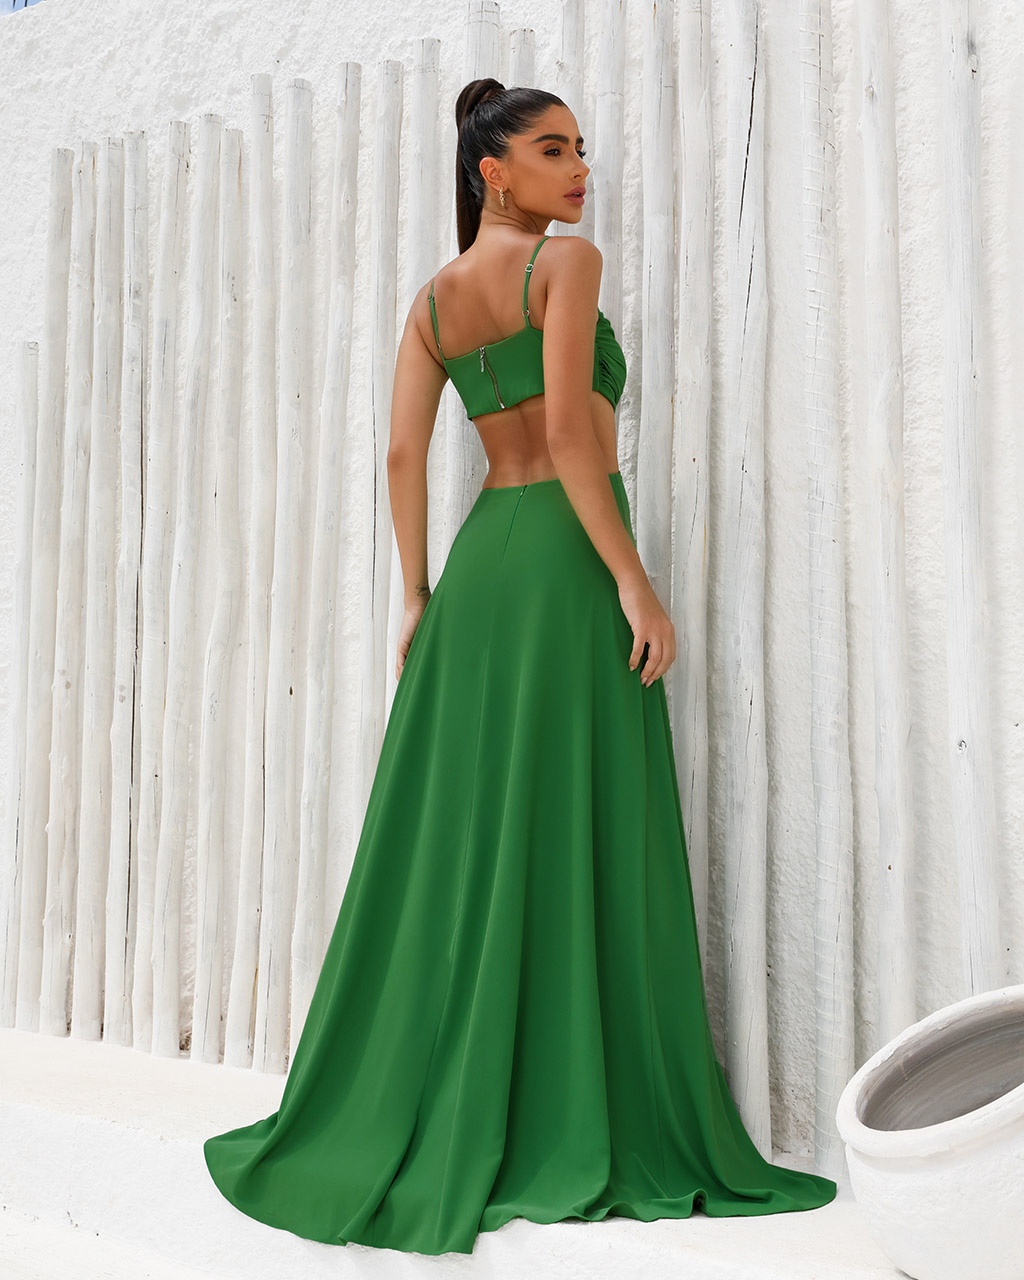 Vestido Longo Verde Silvana - Empório NM